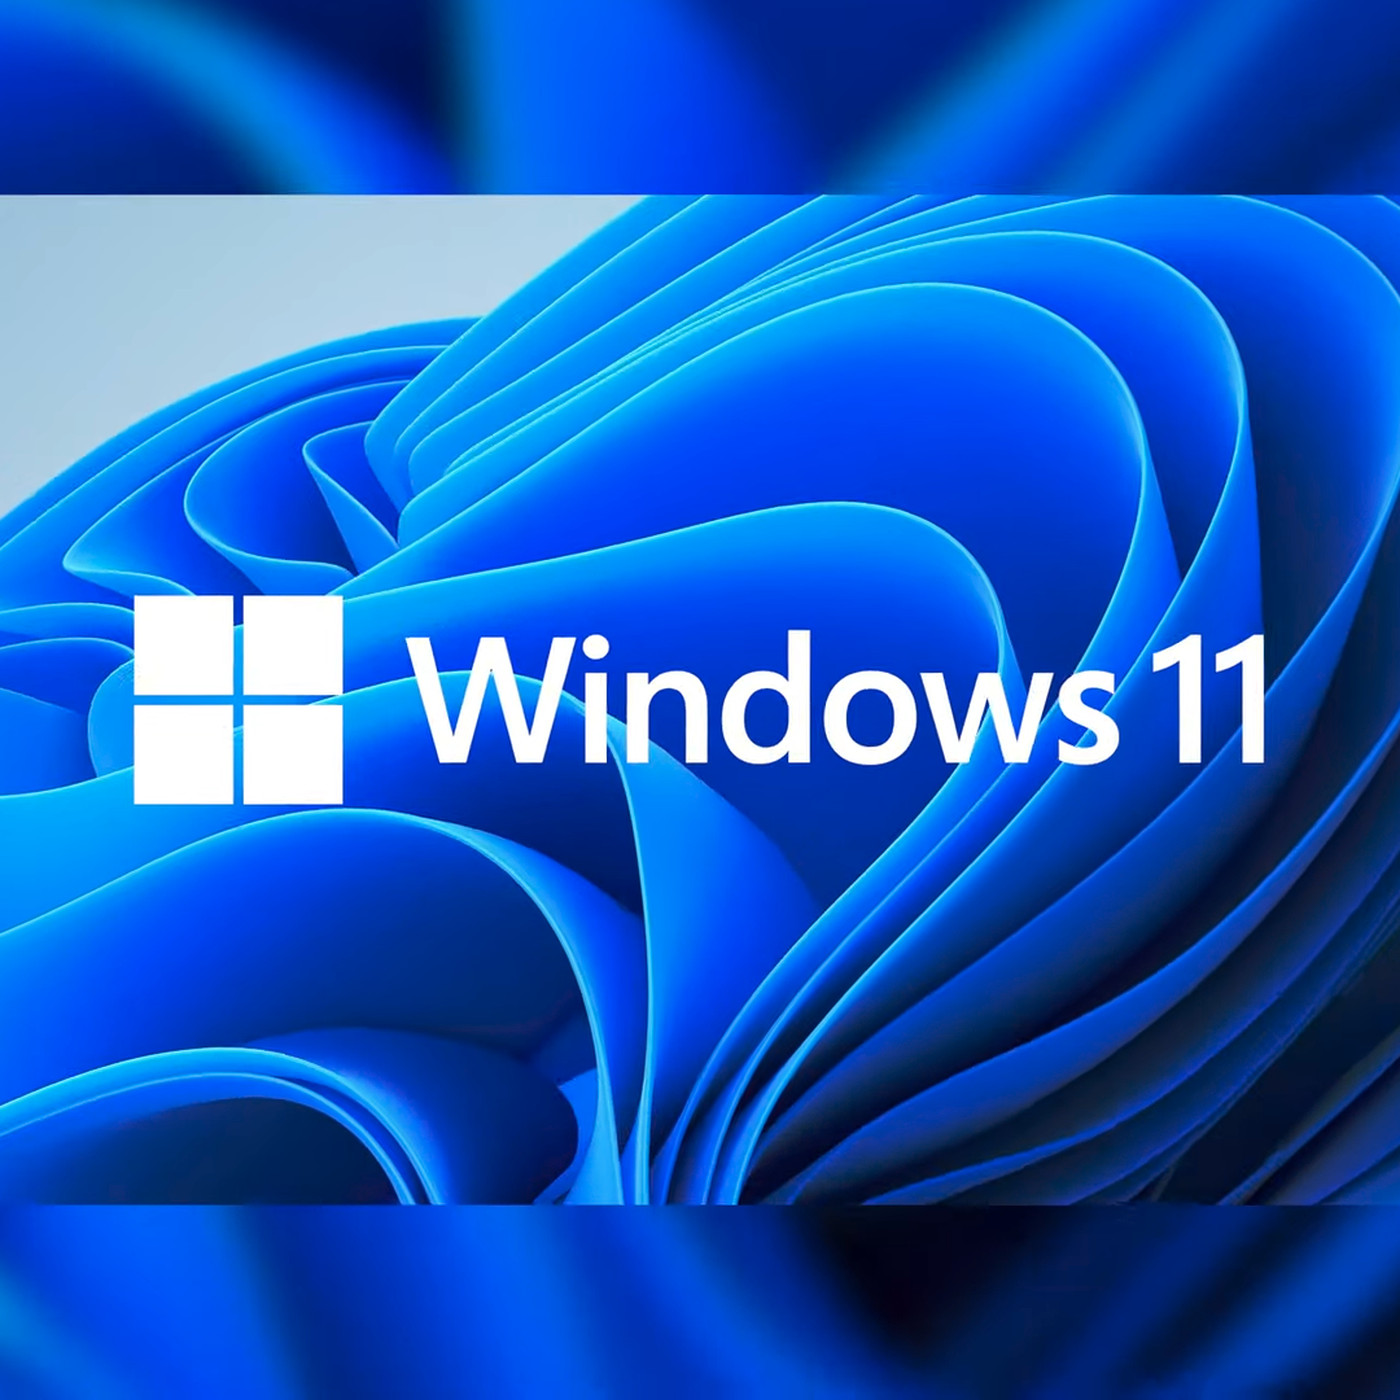 The New Windows 11